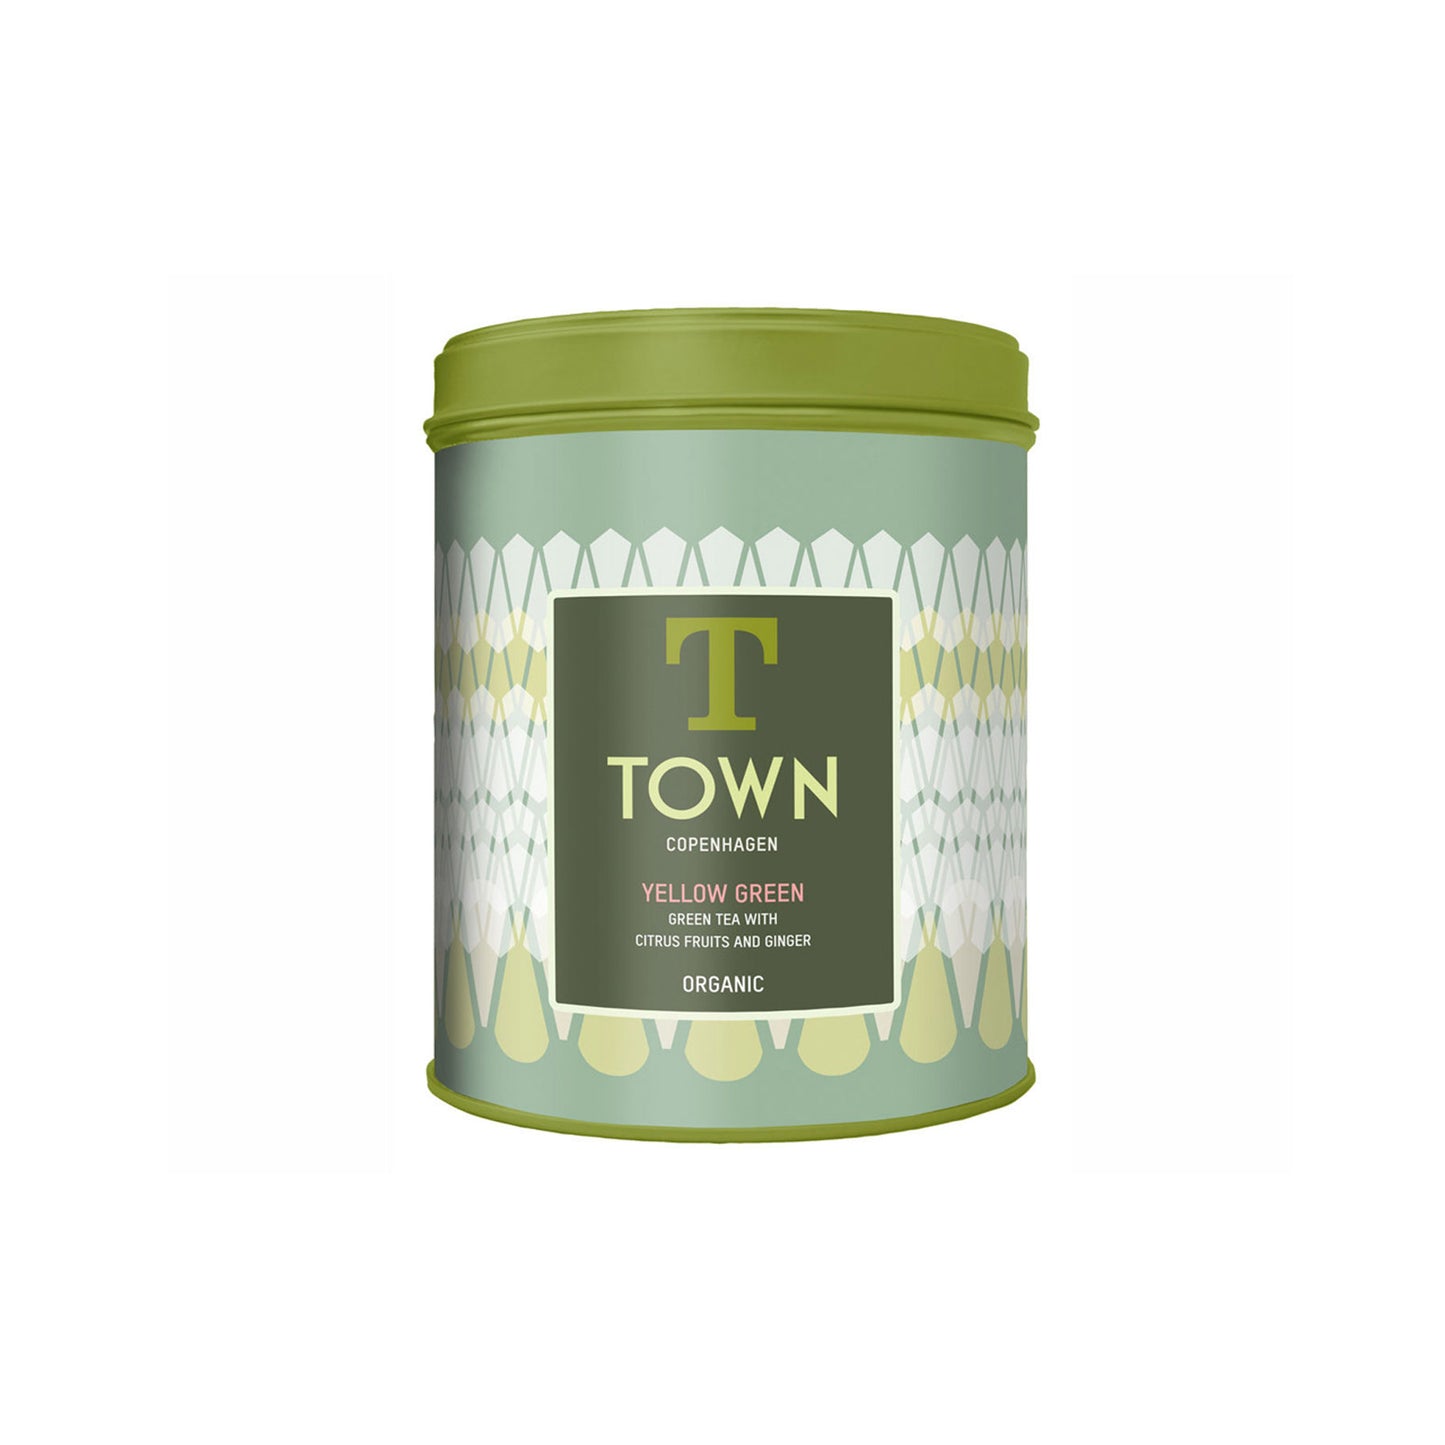 T Town Yellow Green - 150g - dåse